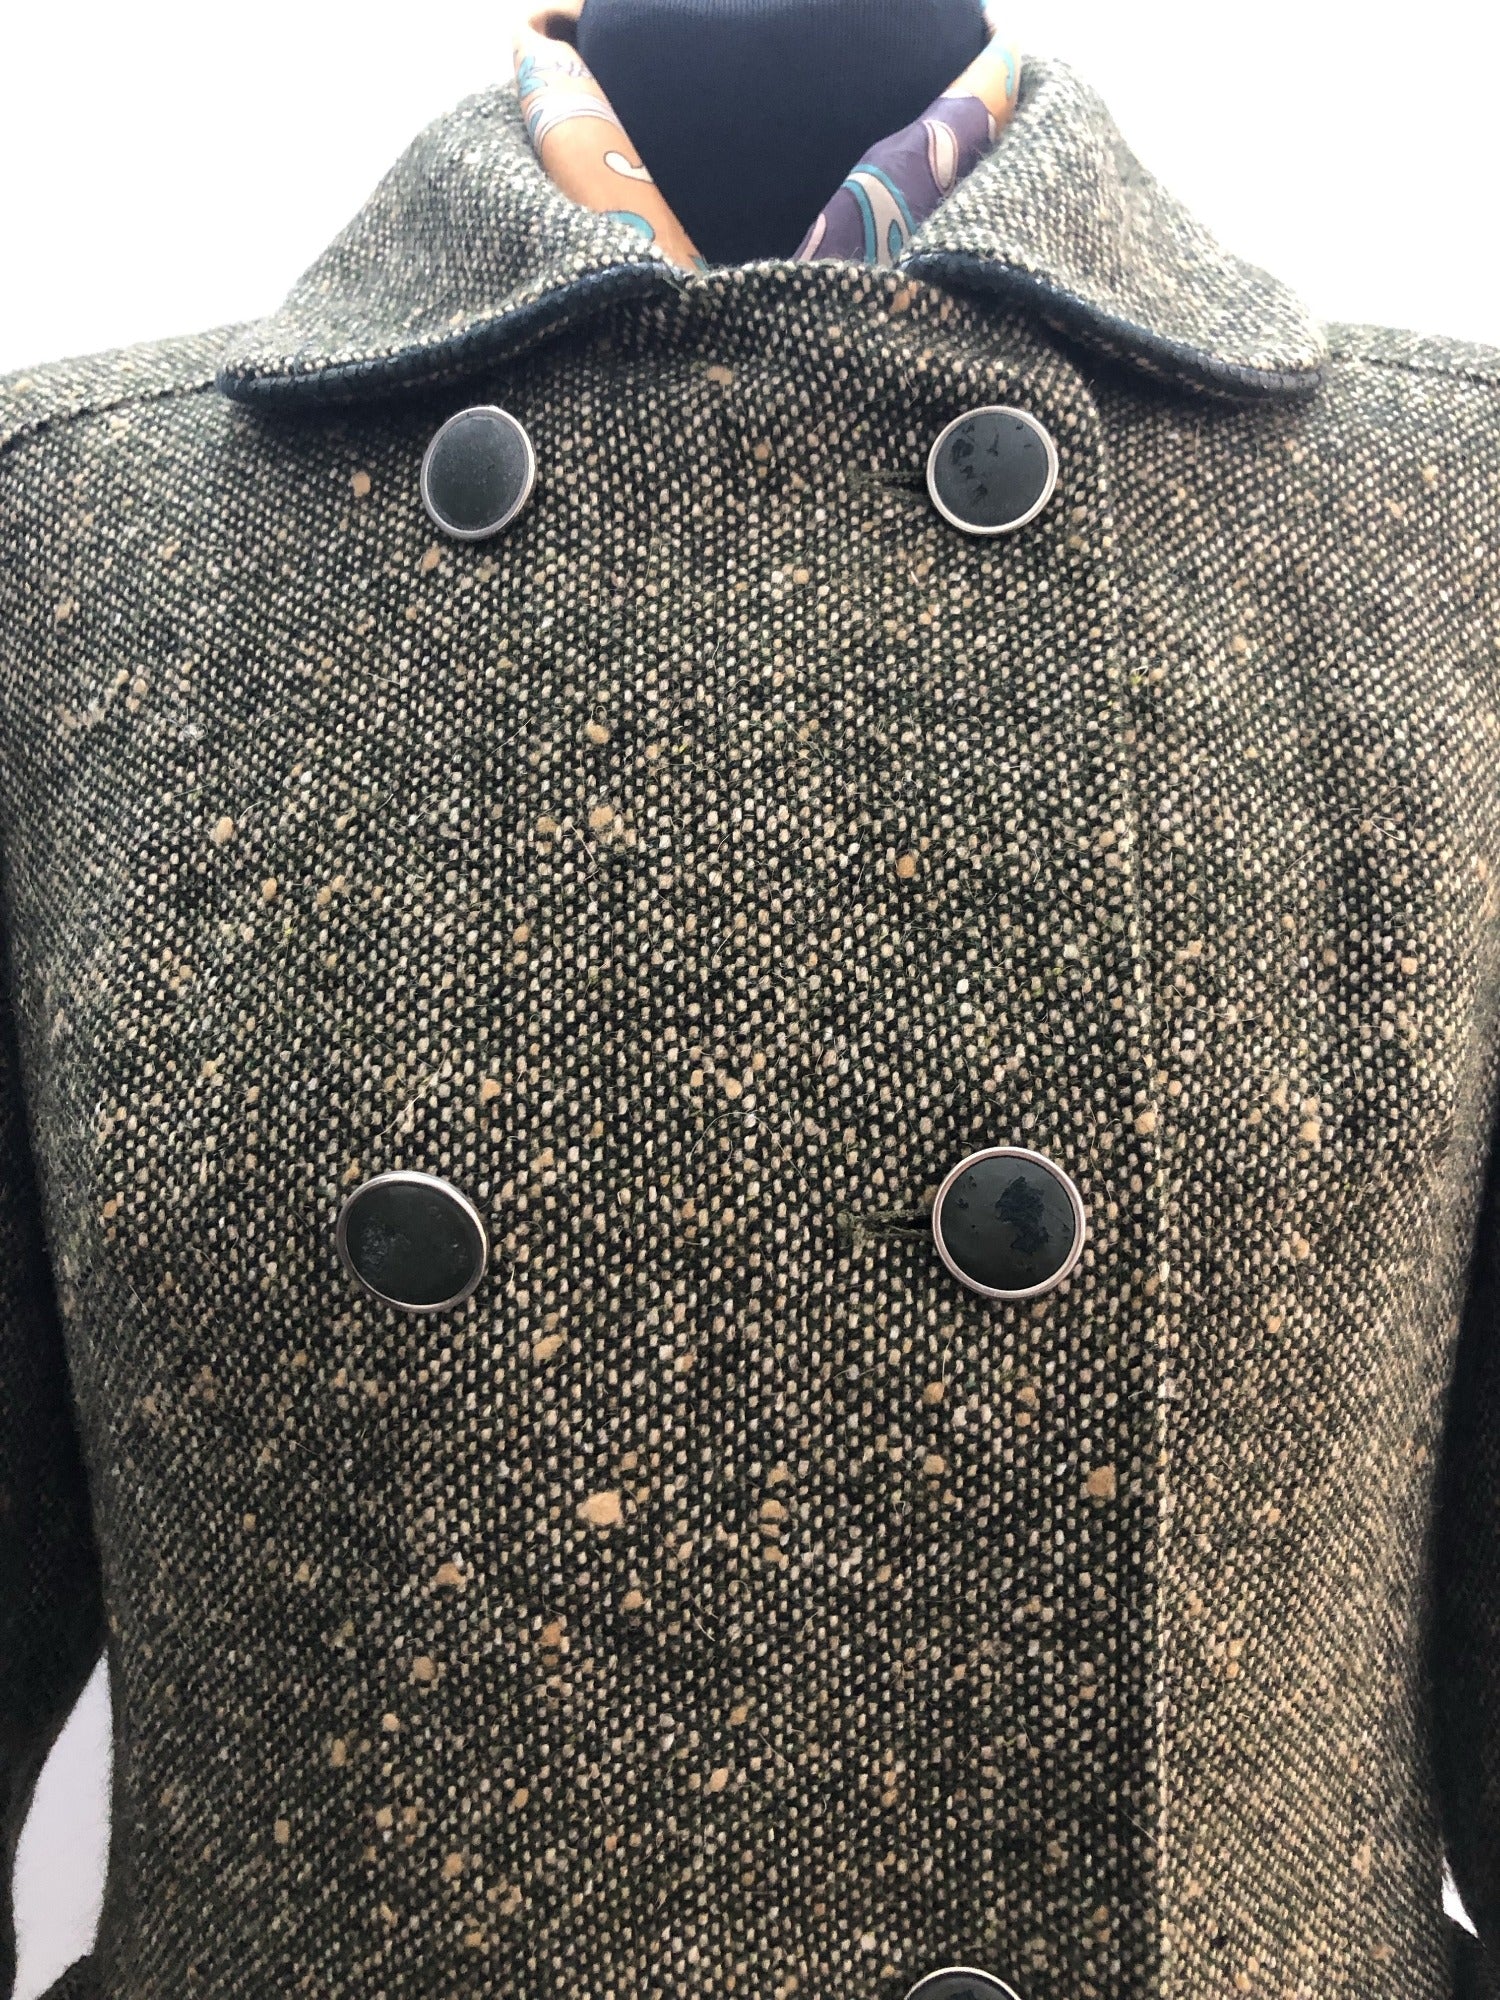 wool  womens  vintage  Urban Village Vintage  two piece  trousers  suit  set  MOD  Jacket  brown  blazer jacket  Alexon  60s  1960s  10